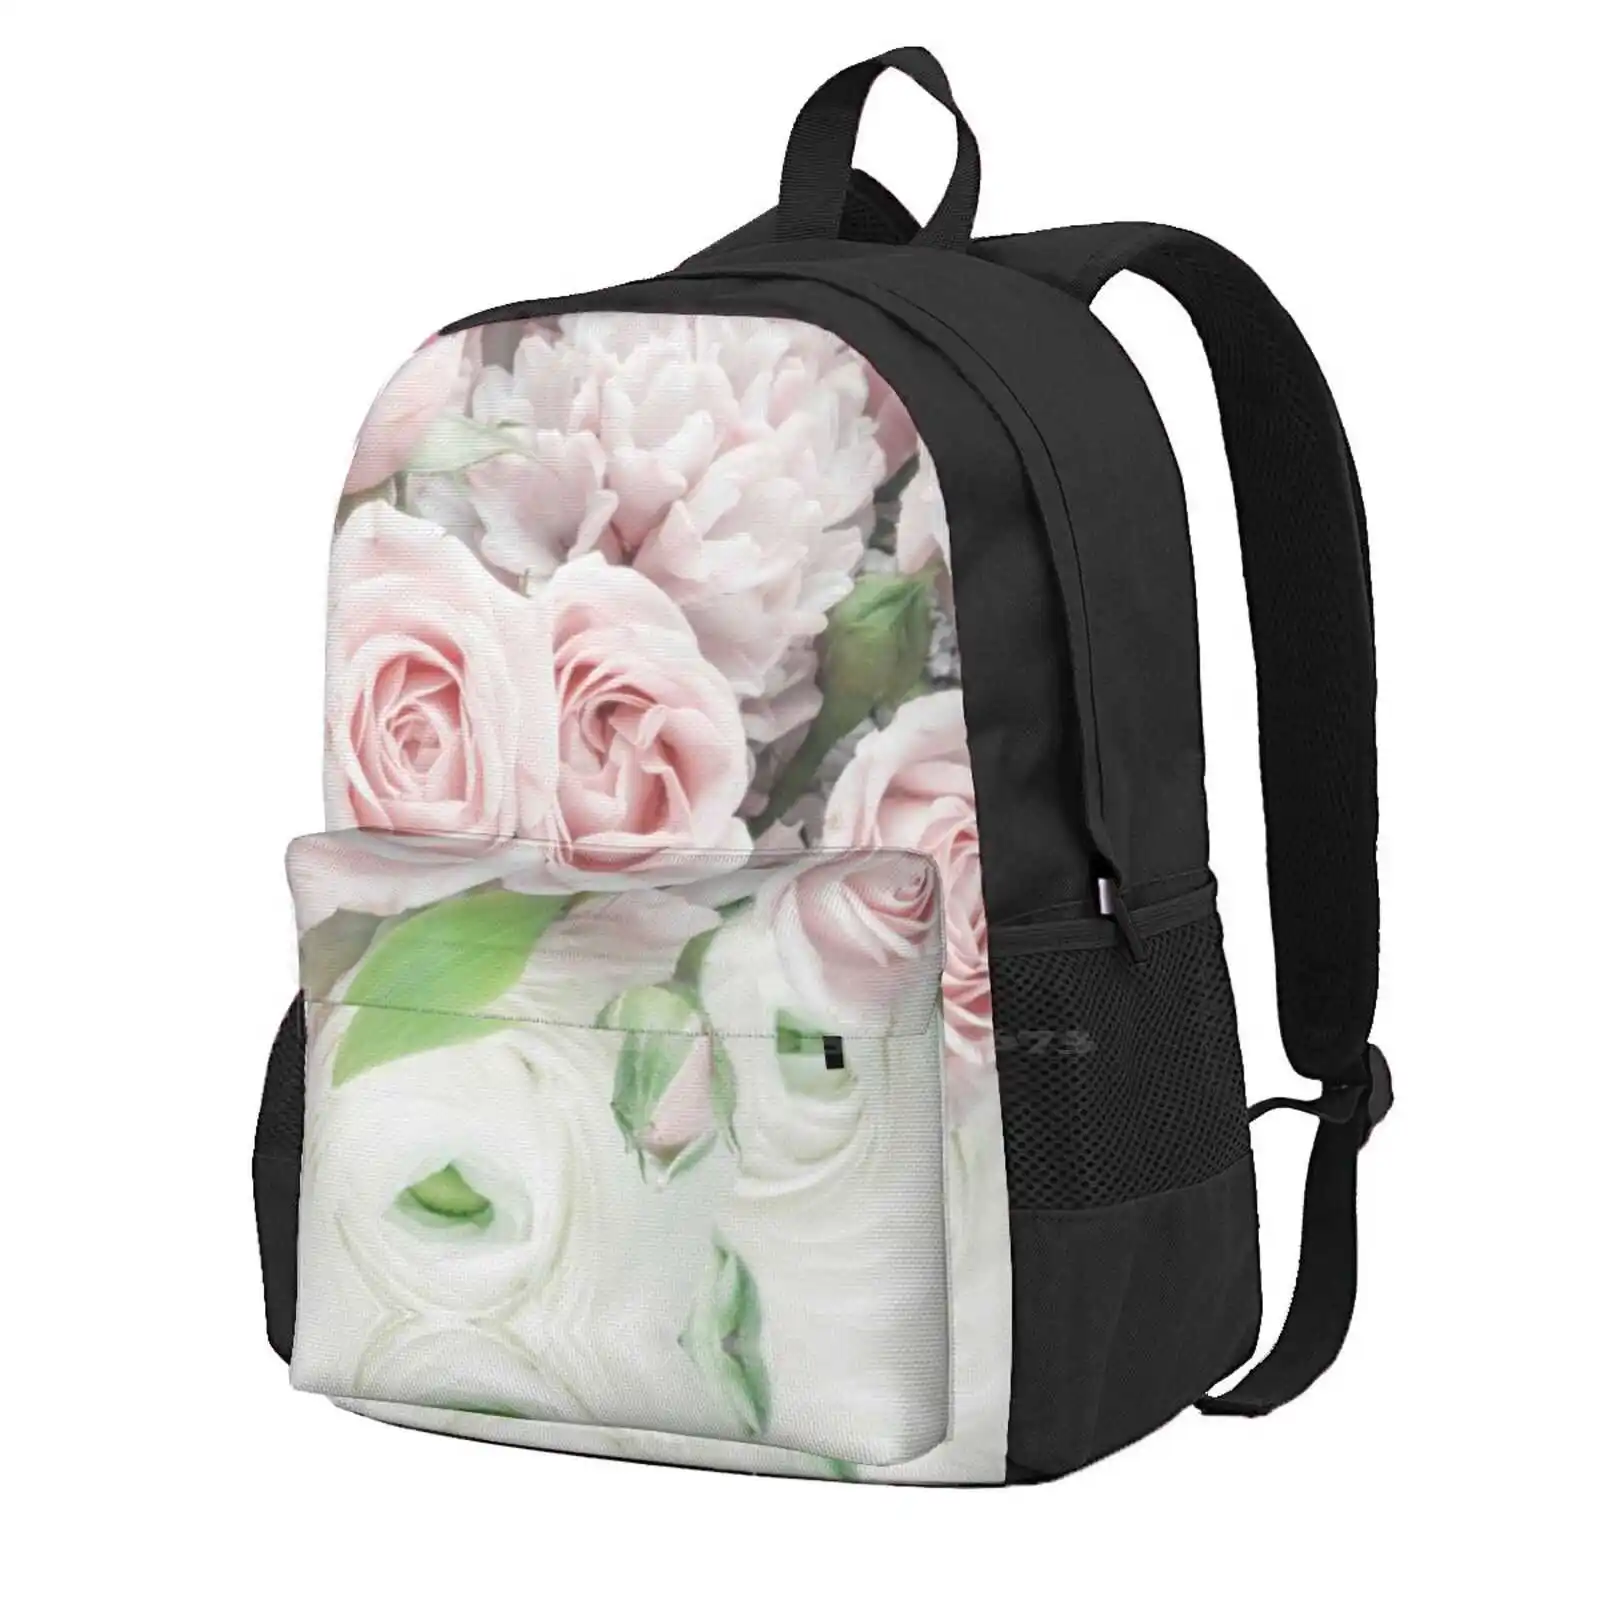 

Romantic Blush Pink & White Roses Backpack For Student School Laptop Travel Bag Wedding Flowers Romantic Flowers Pink White